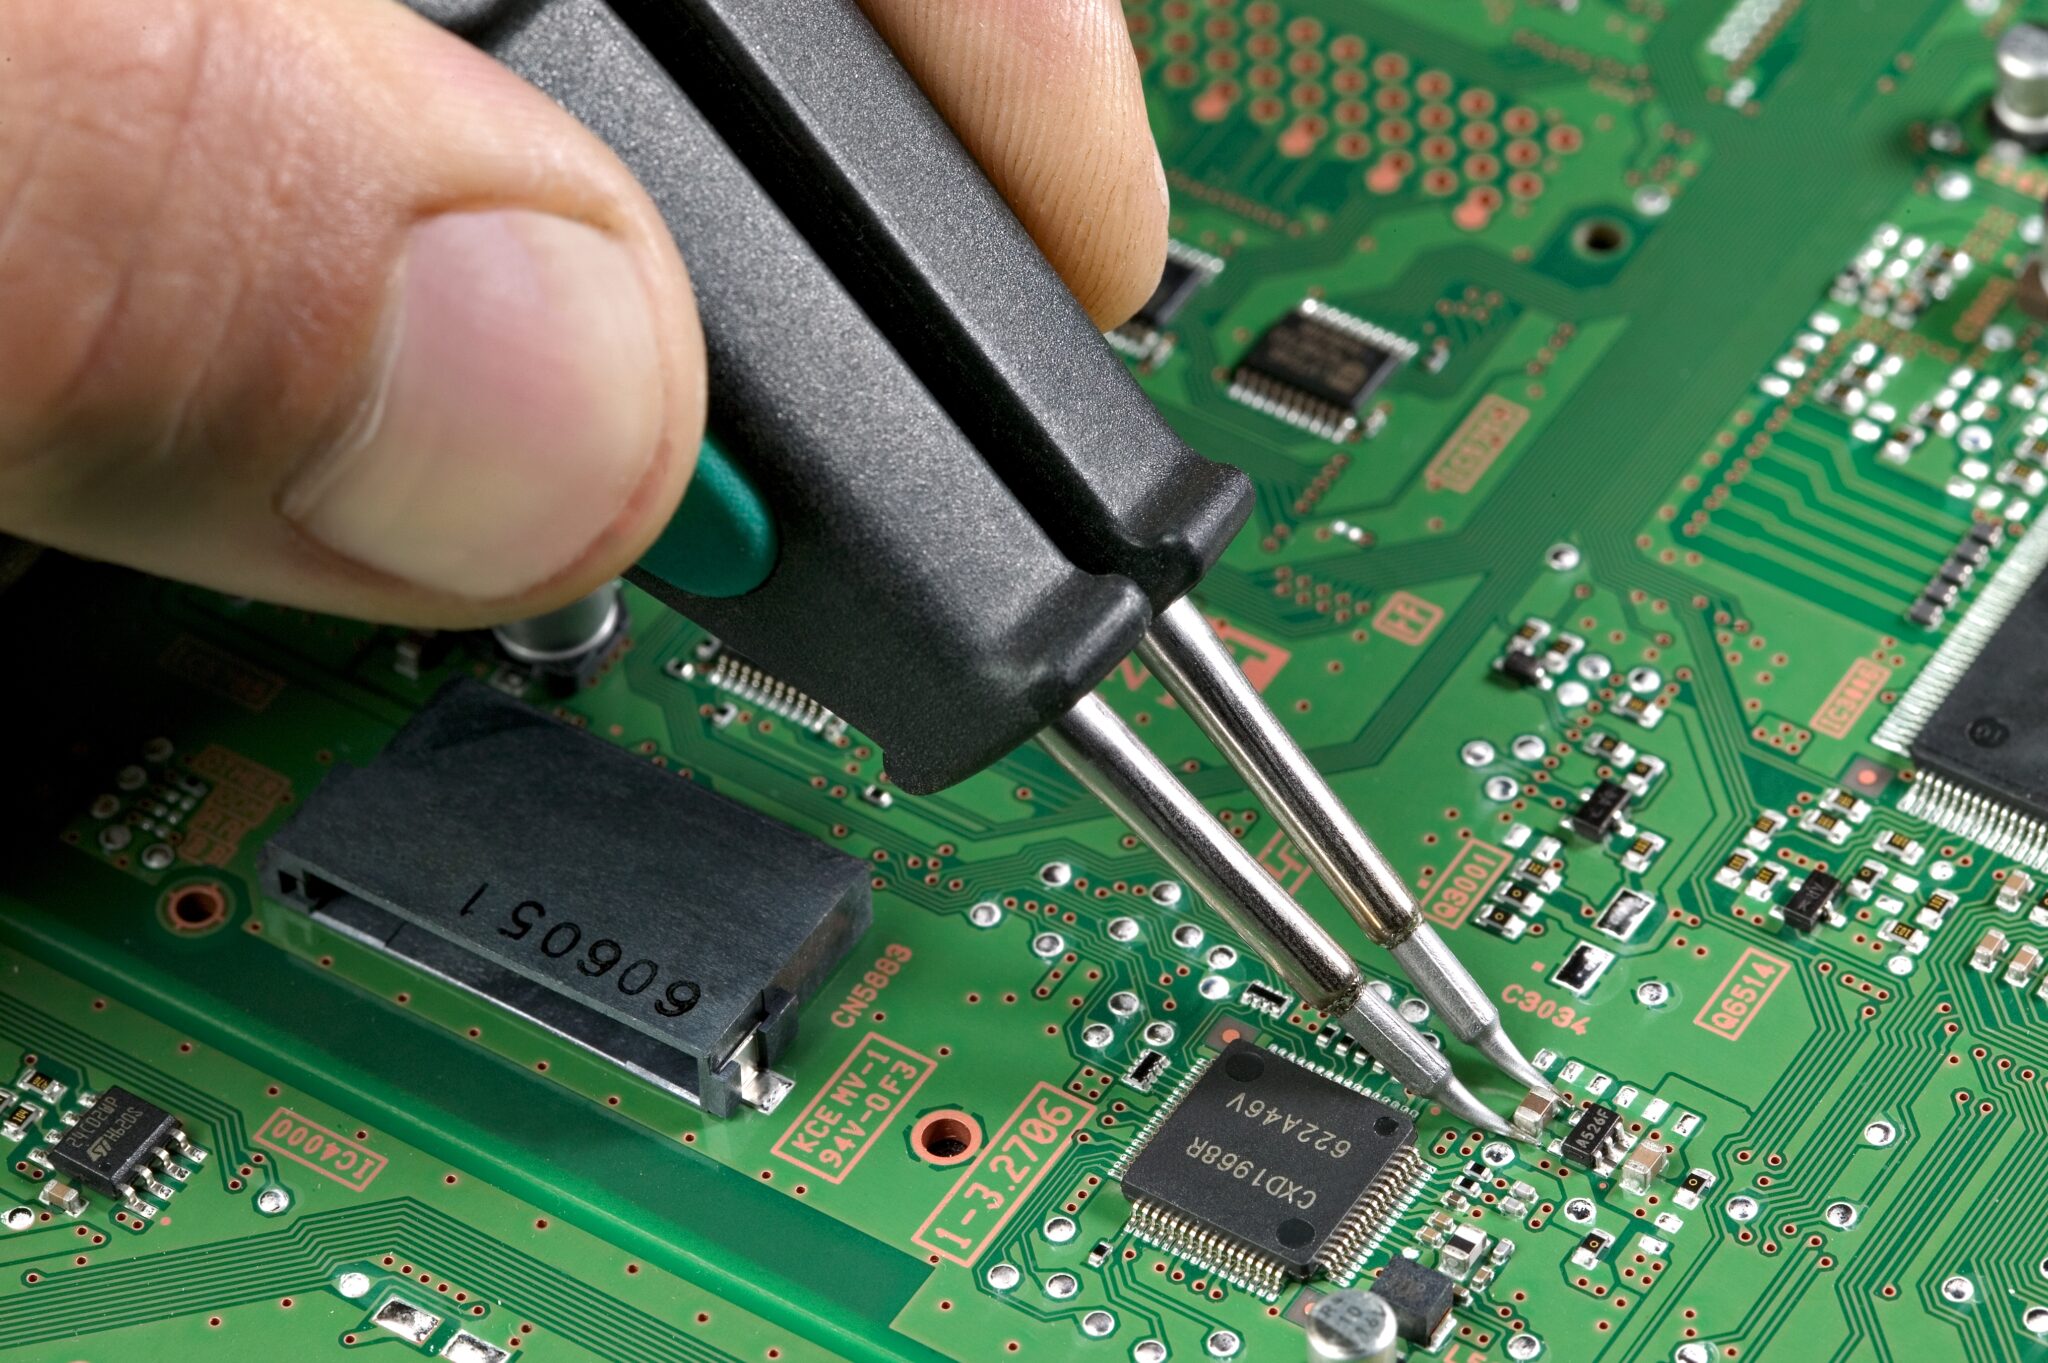 Originally a circuit board repair company, Compel is now a complete MSP